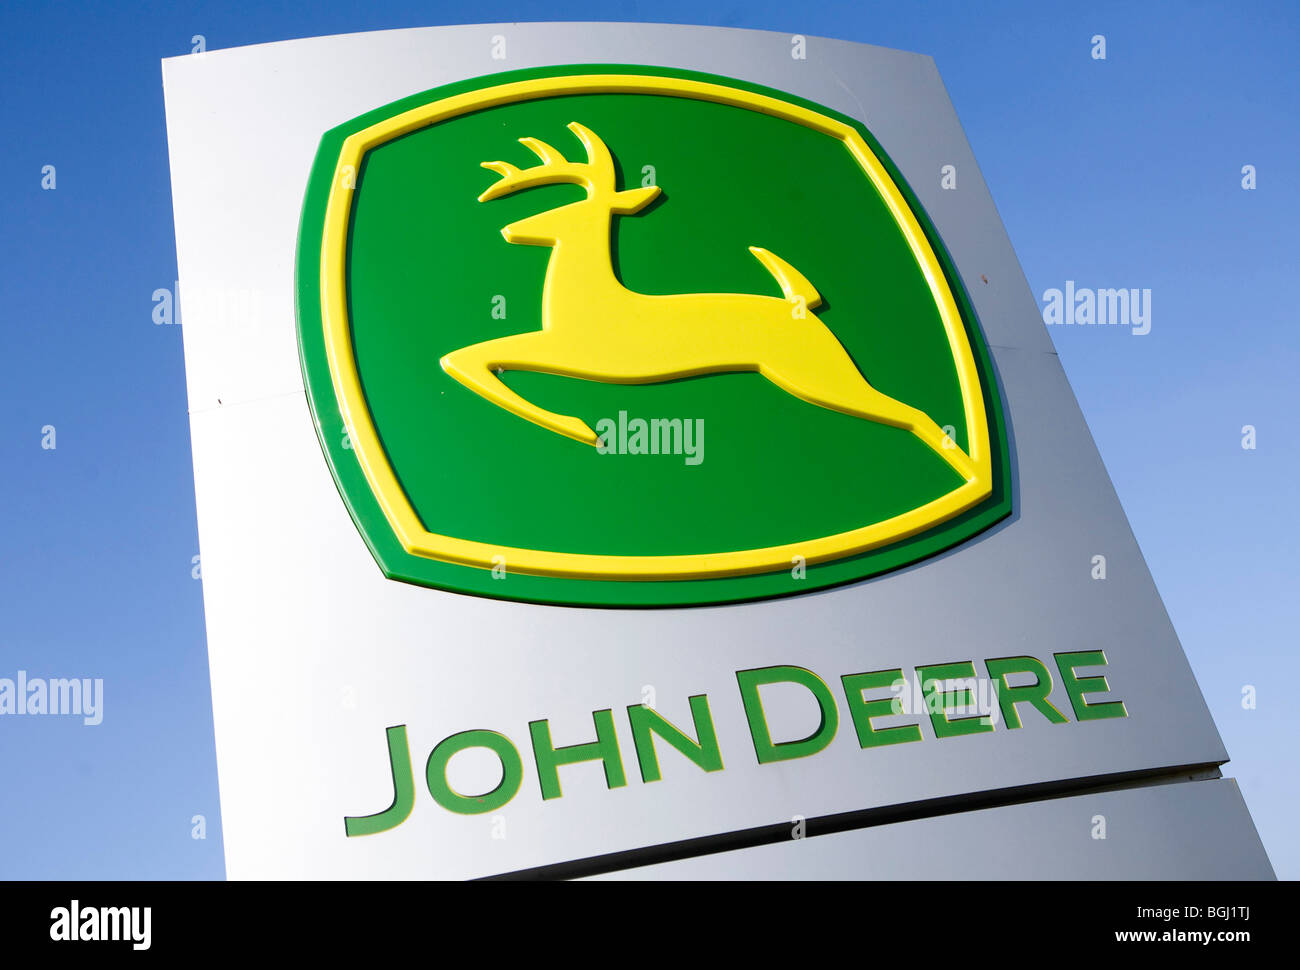 John Deere tractors and signage.  Stock Photo